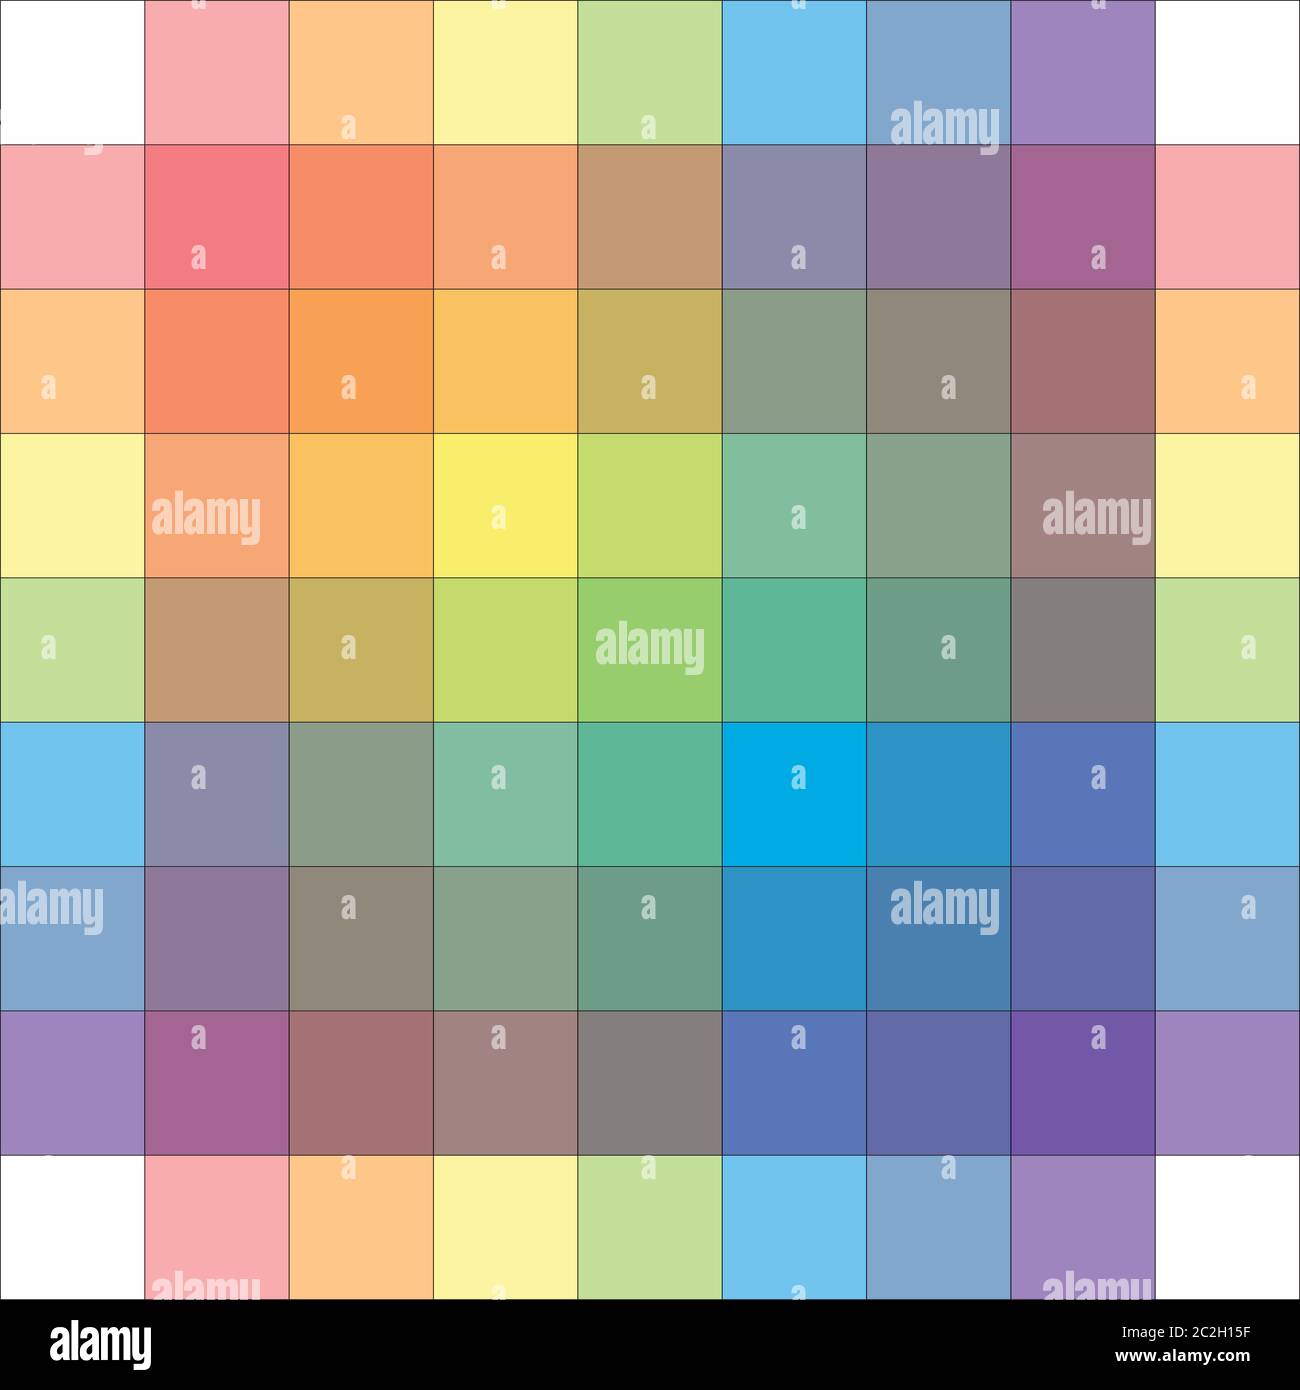 Polychrome Multicolor Spectral Versicolor Rainbow Grid of 9x9 segments. Aquarelle light spectral harmonic colorful palette of th Stock Photo